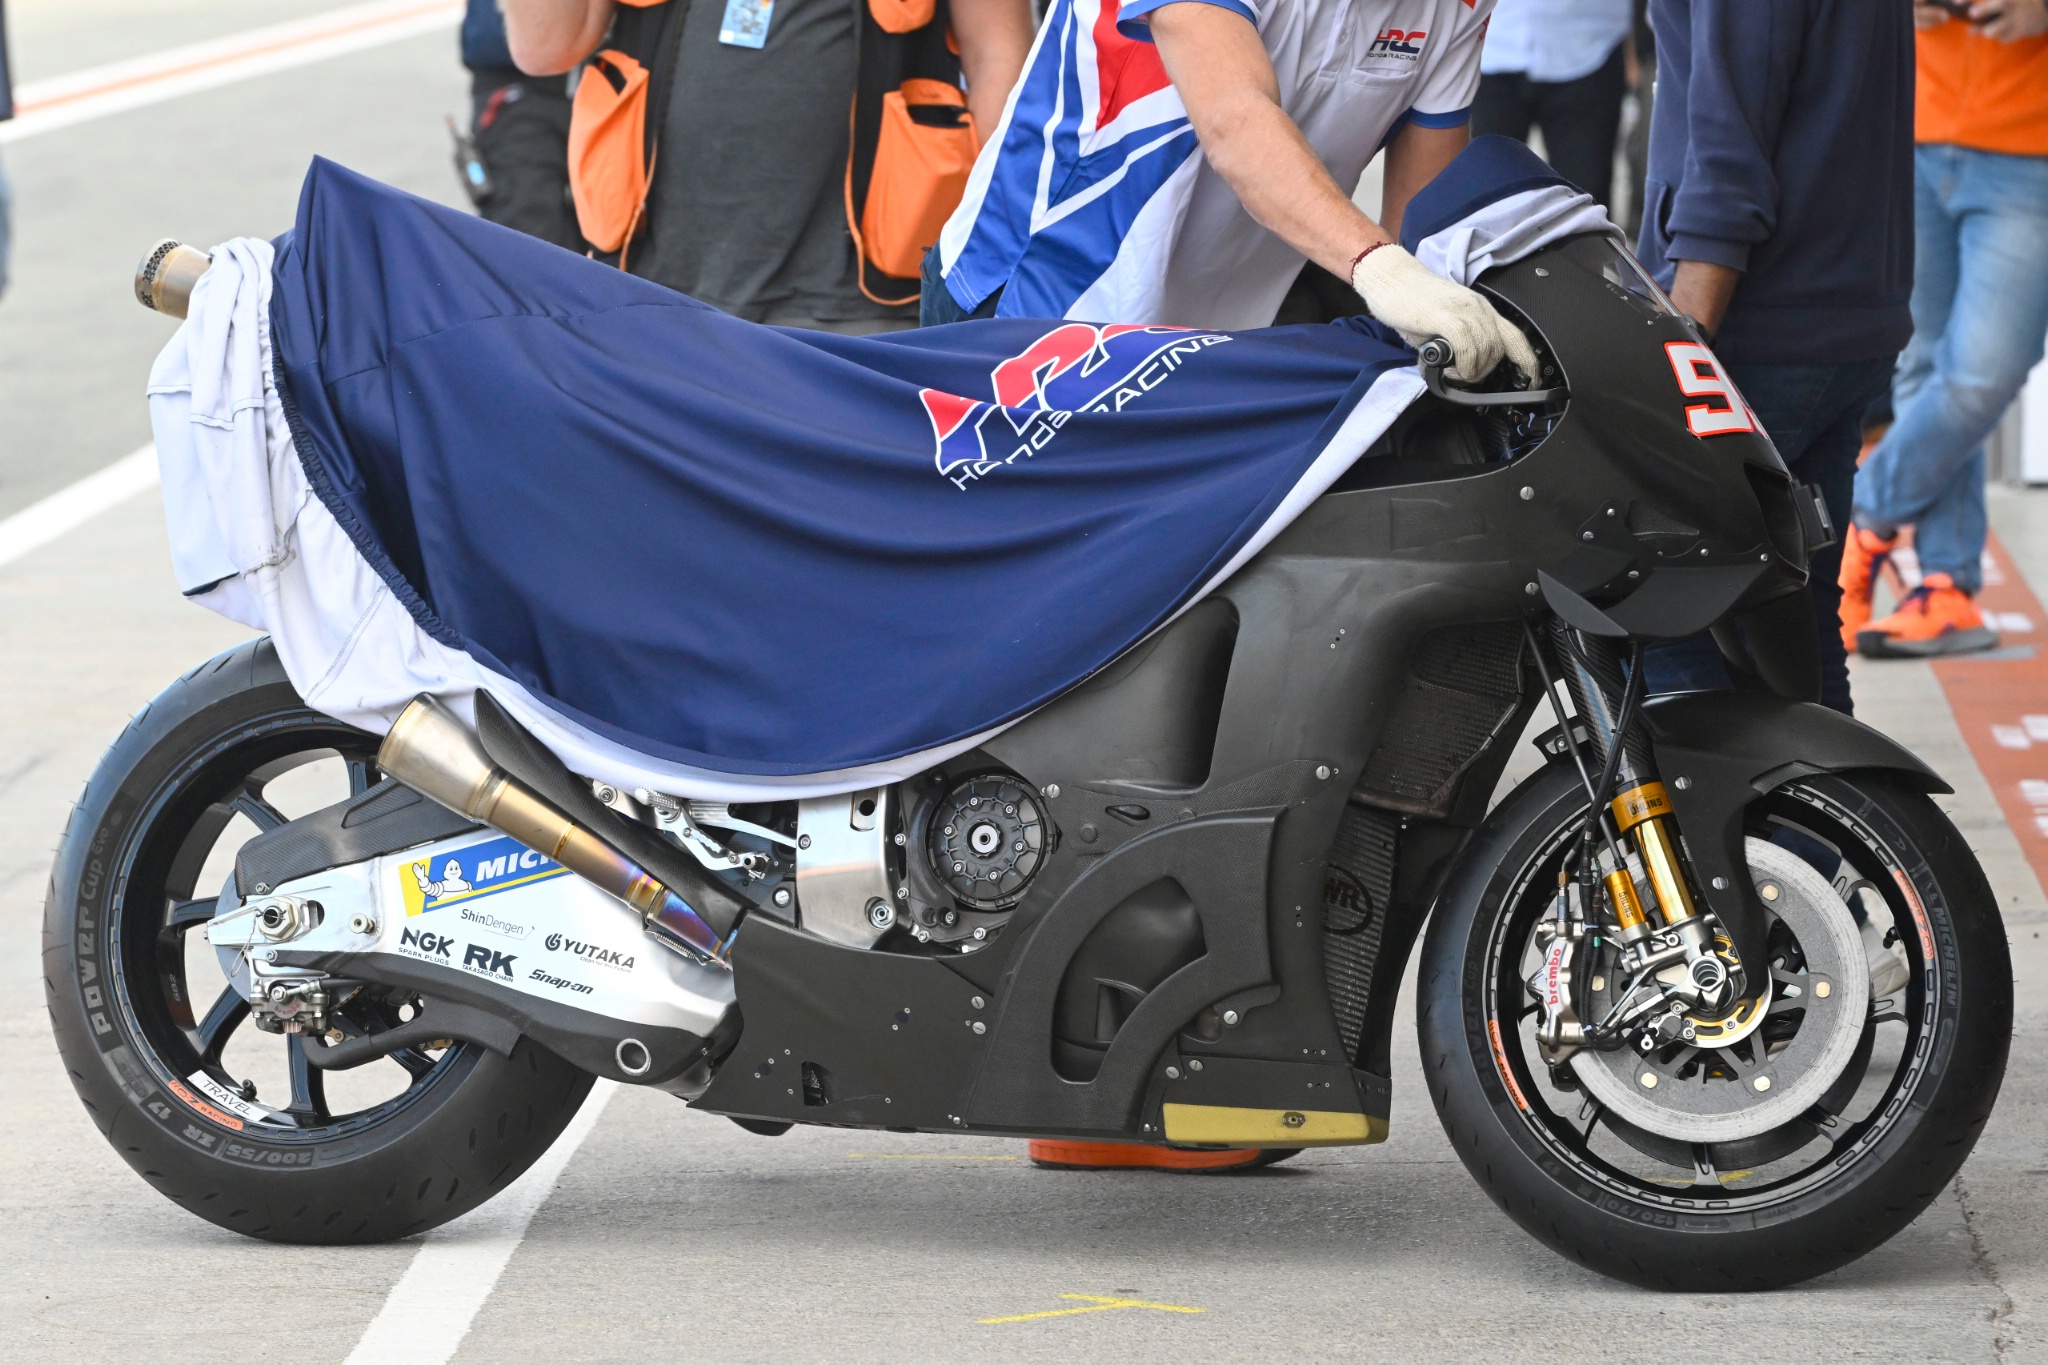 Marc Marquez bike, Valencia MotoGP test, 8 November